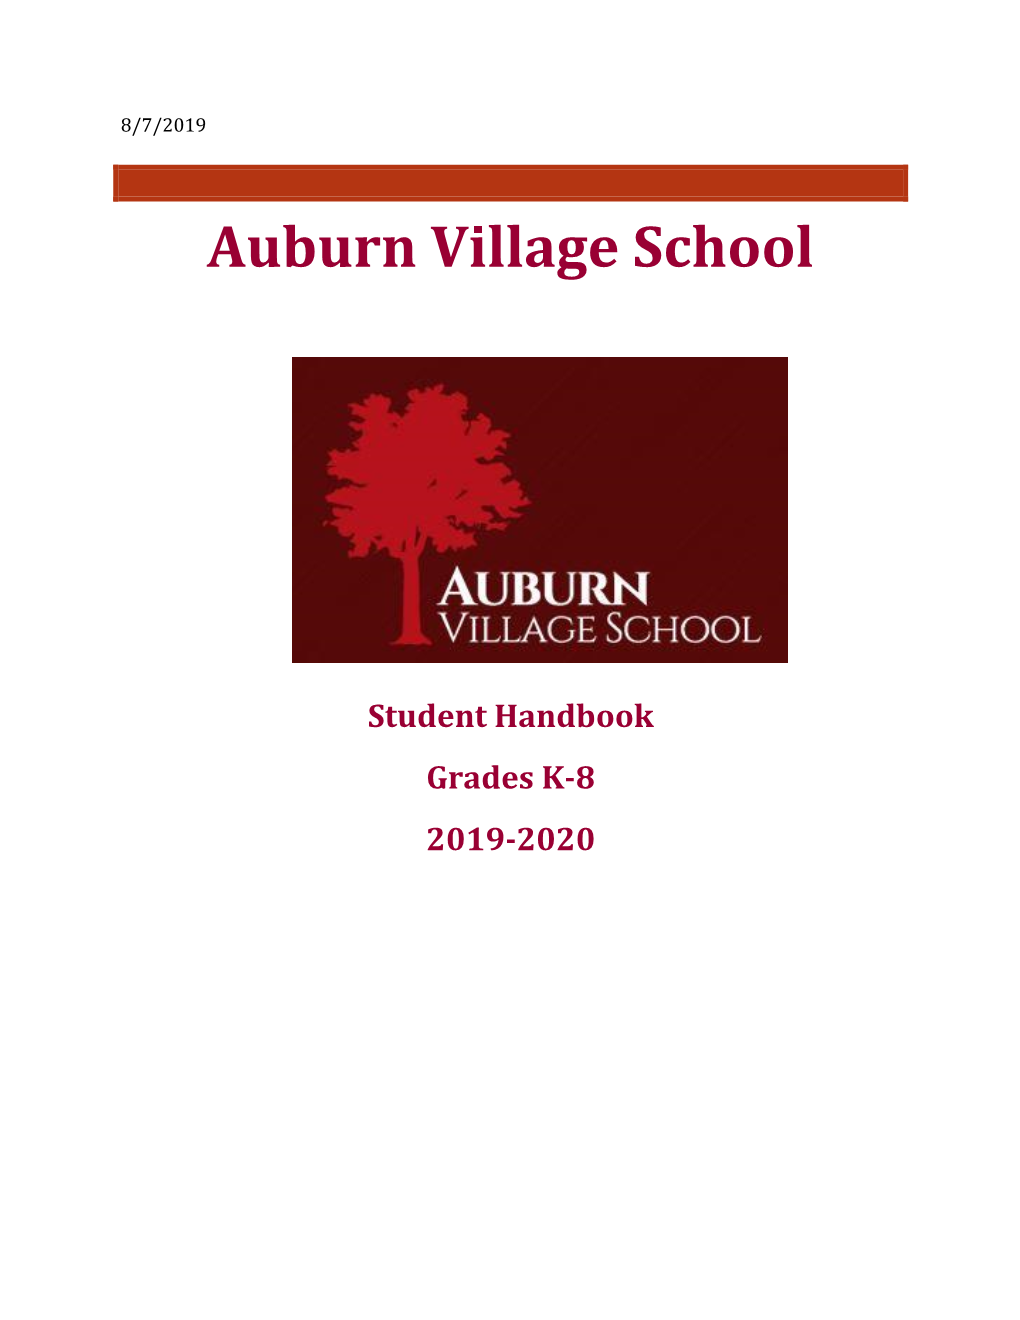 Mission Statement of the Auburn Village School